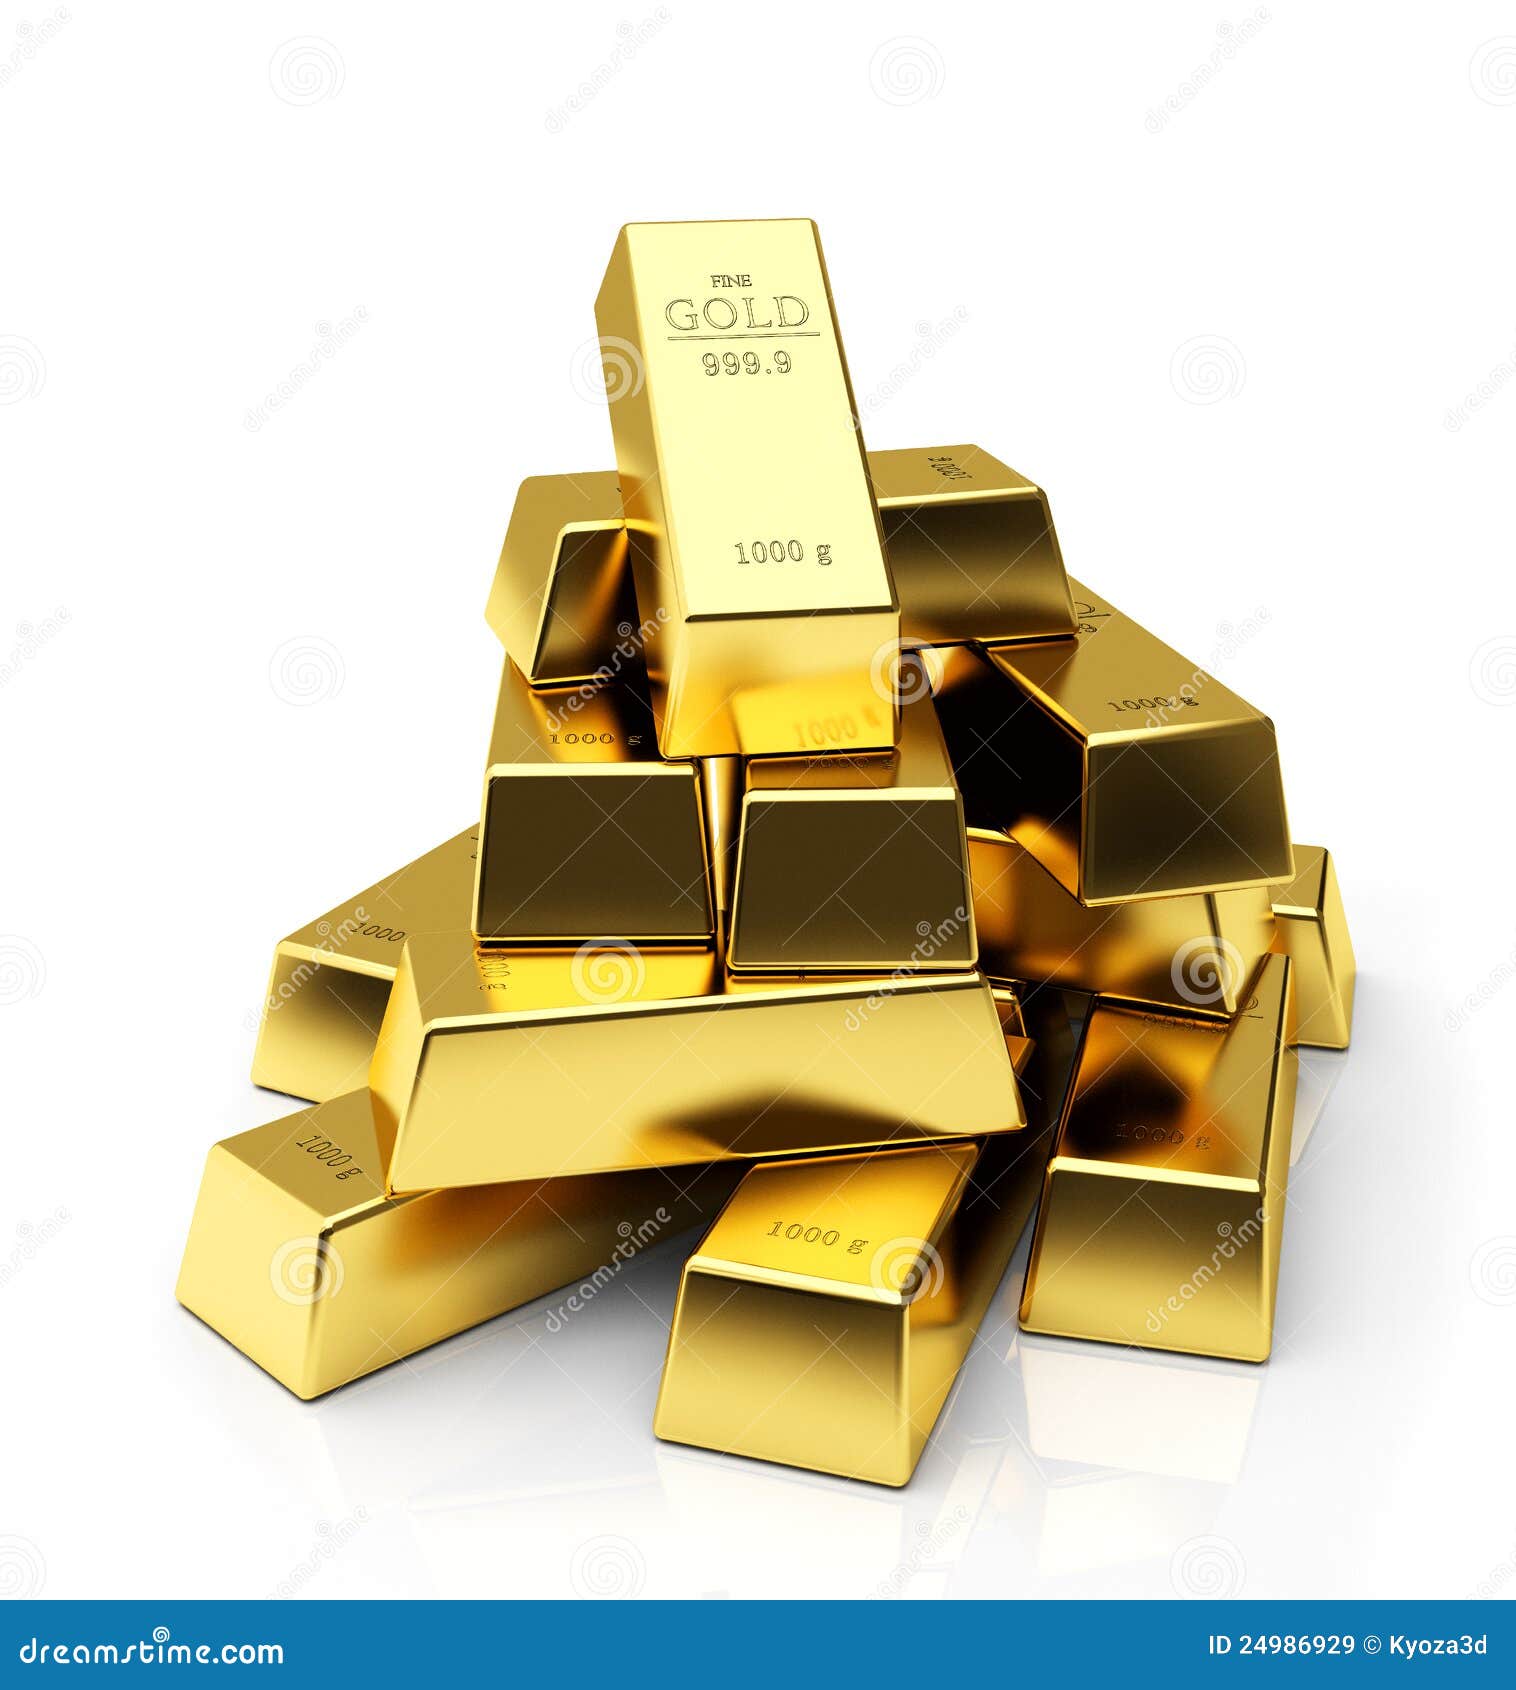 Gold bars stock illustration. Illustration of goldbar - 24986929